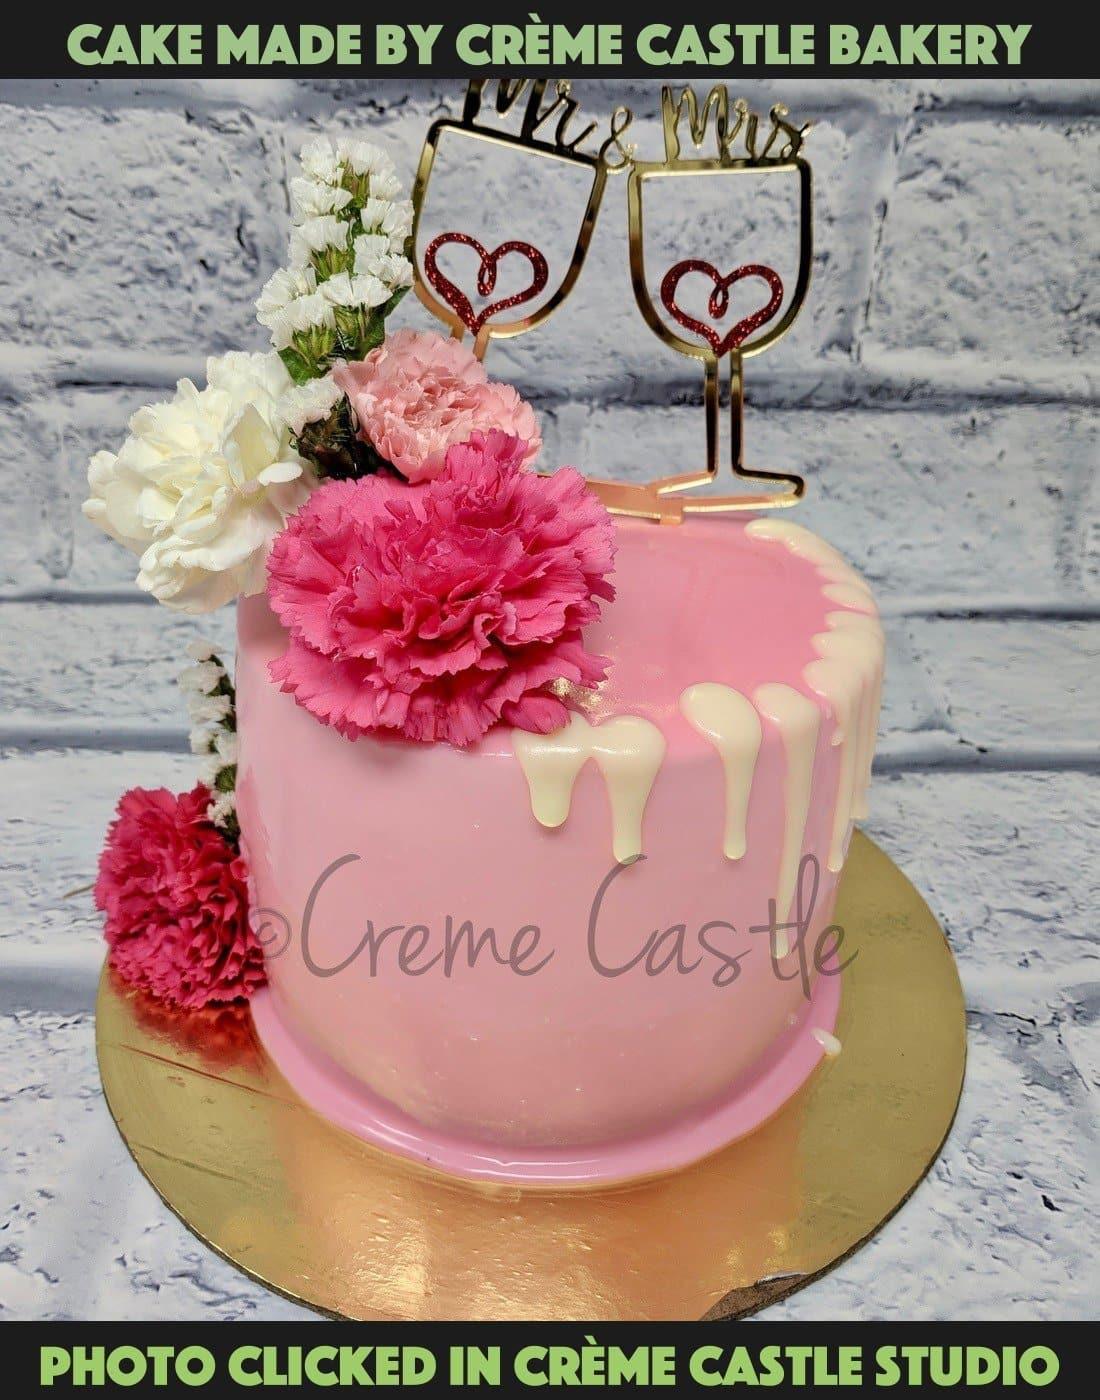 Engagement Theme Cake - Real Flowers on Cake - Customized Cake In Gurgaon